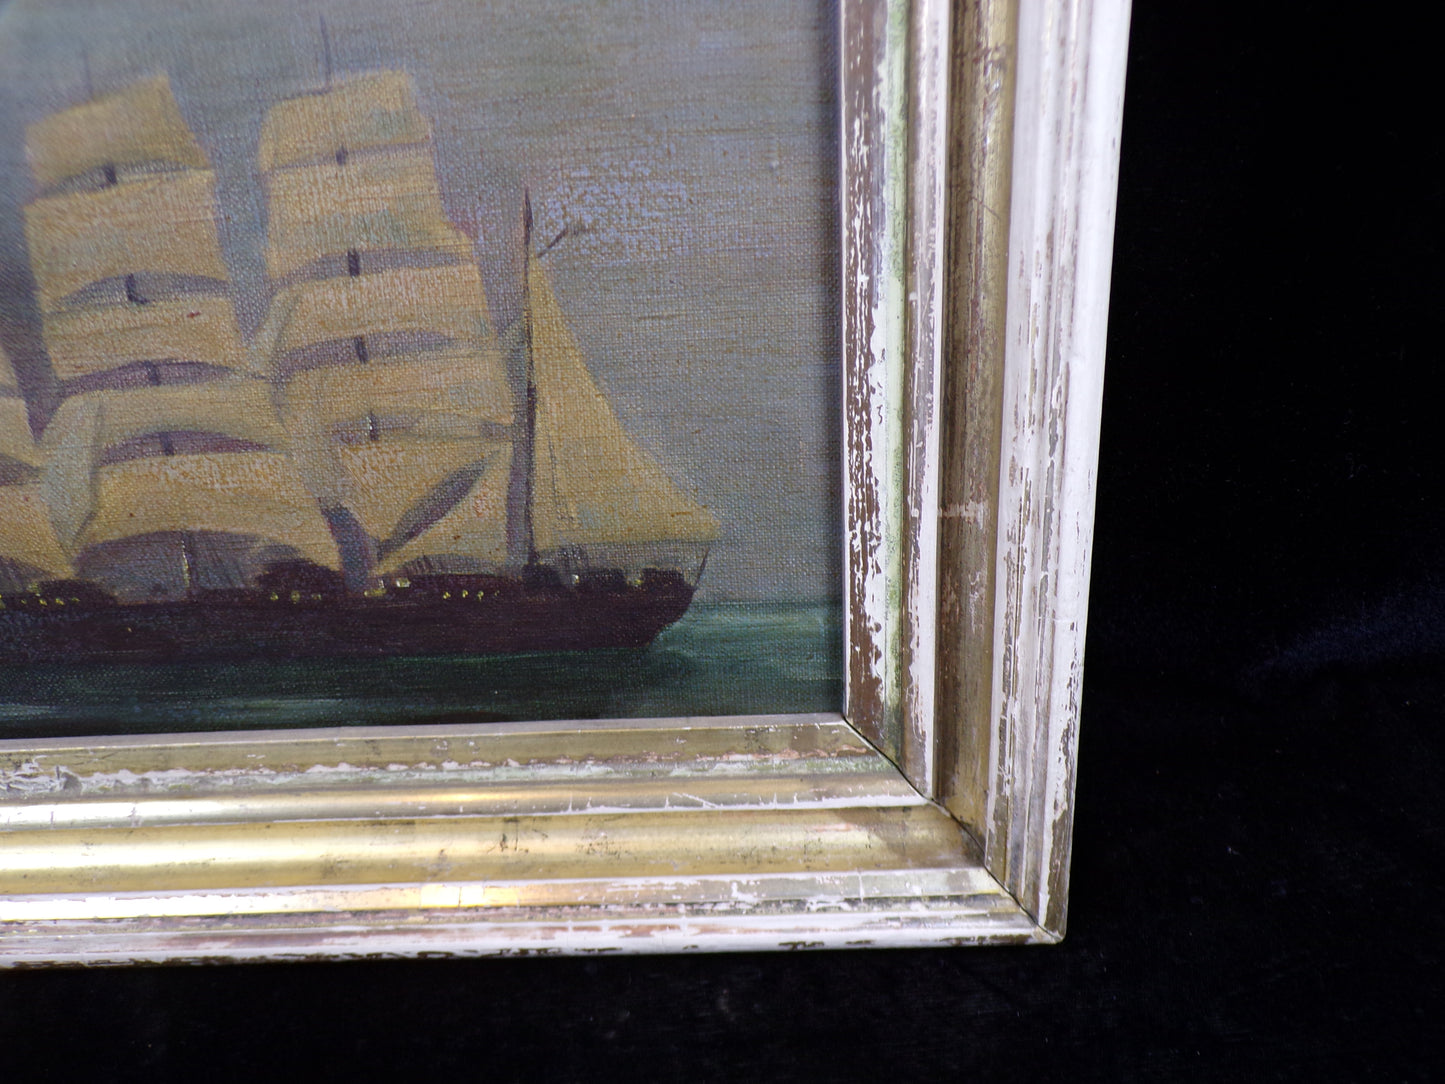 Antique Ship Art / on Canvass